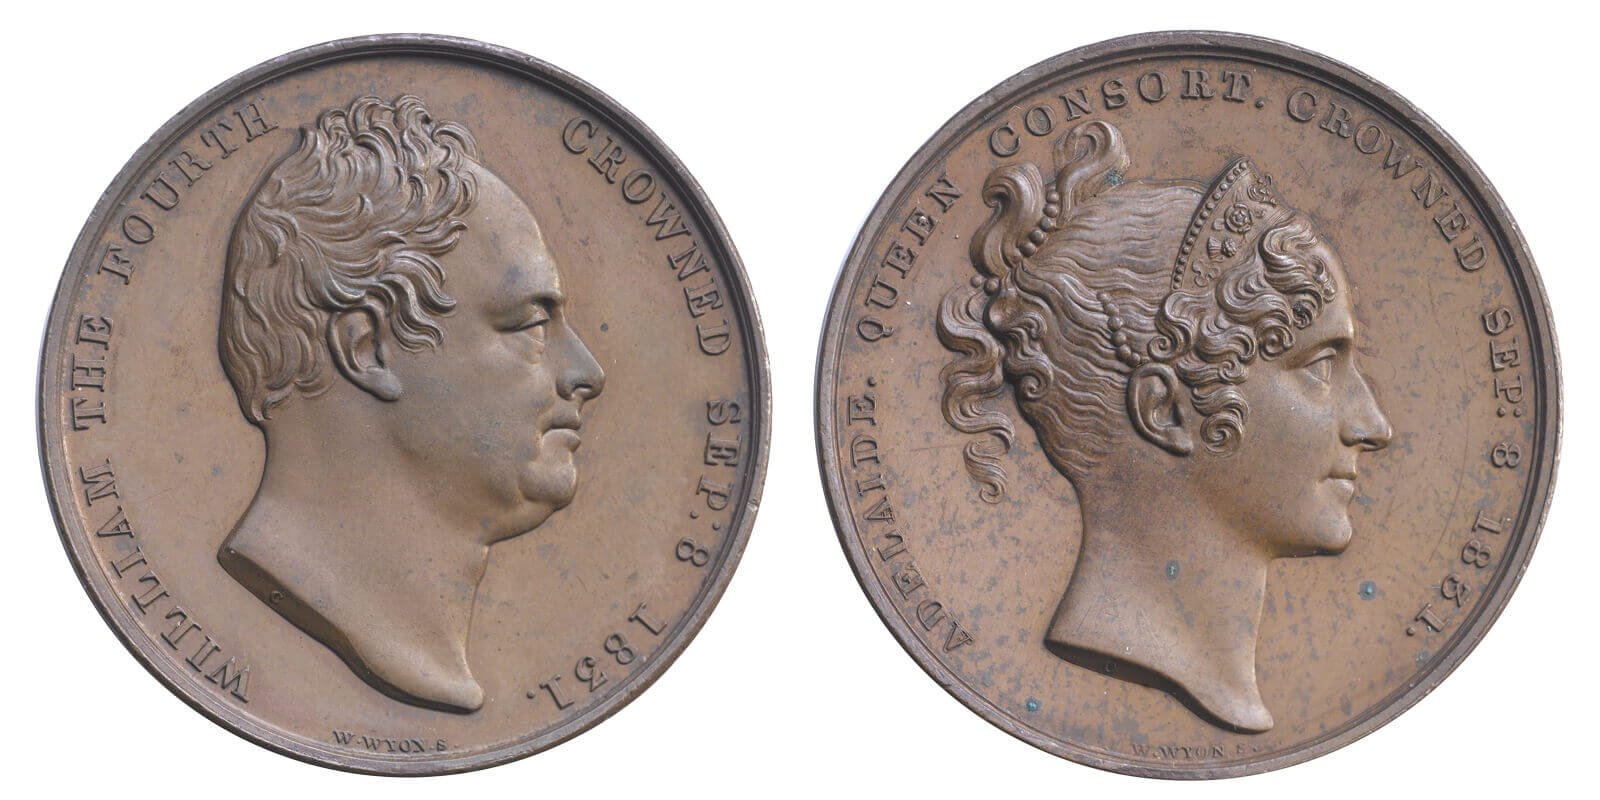 William IV coronation medal.jpg